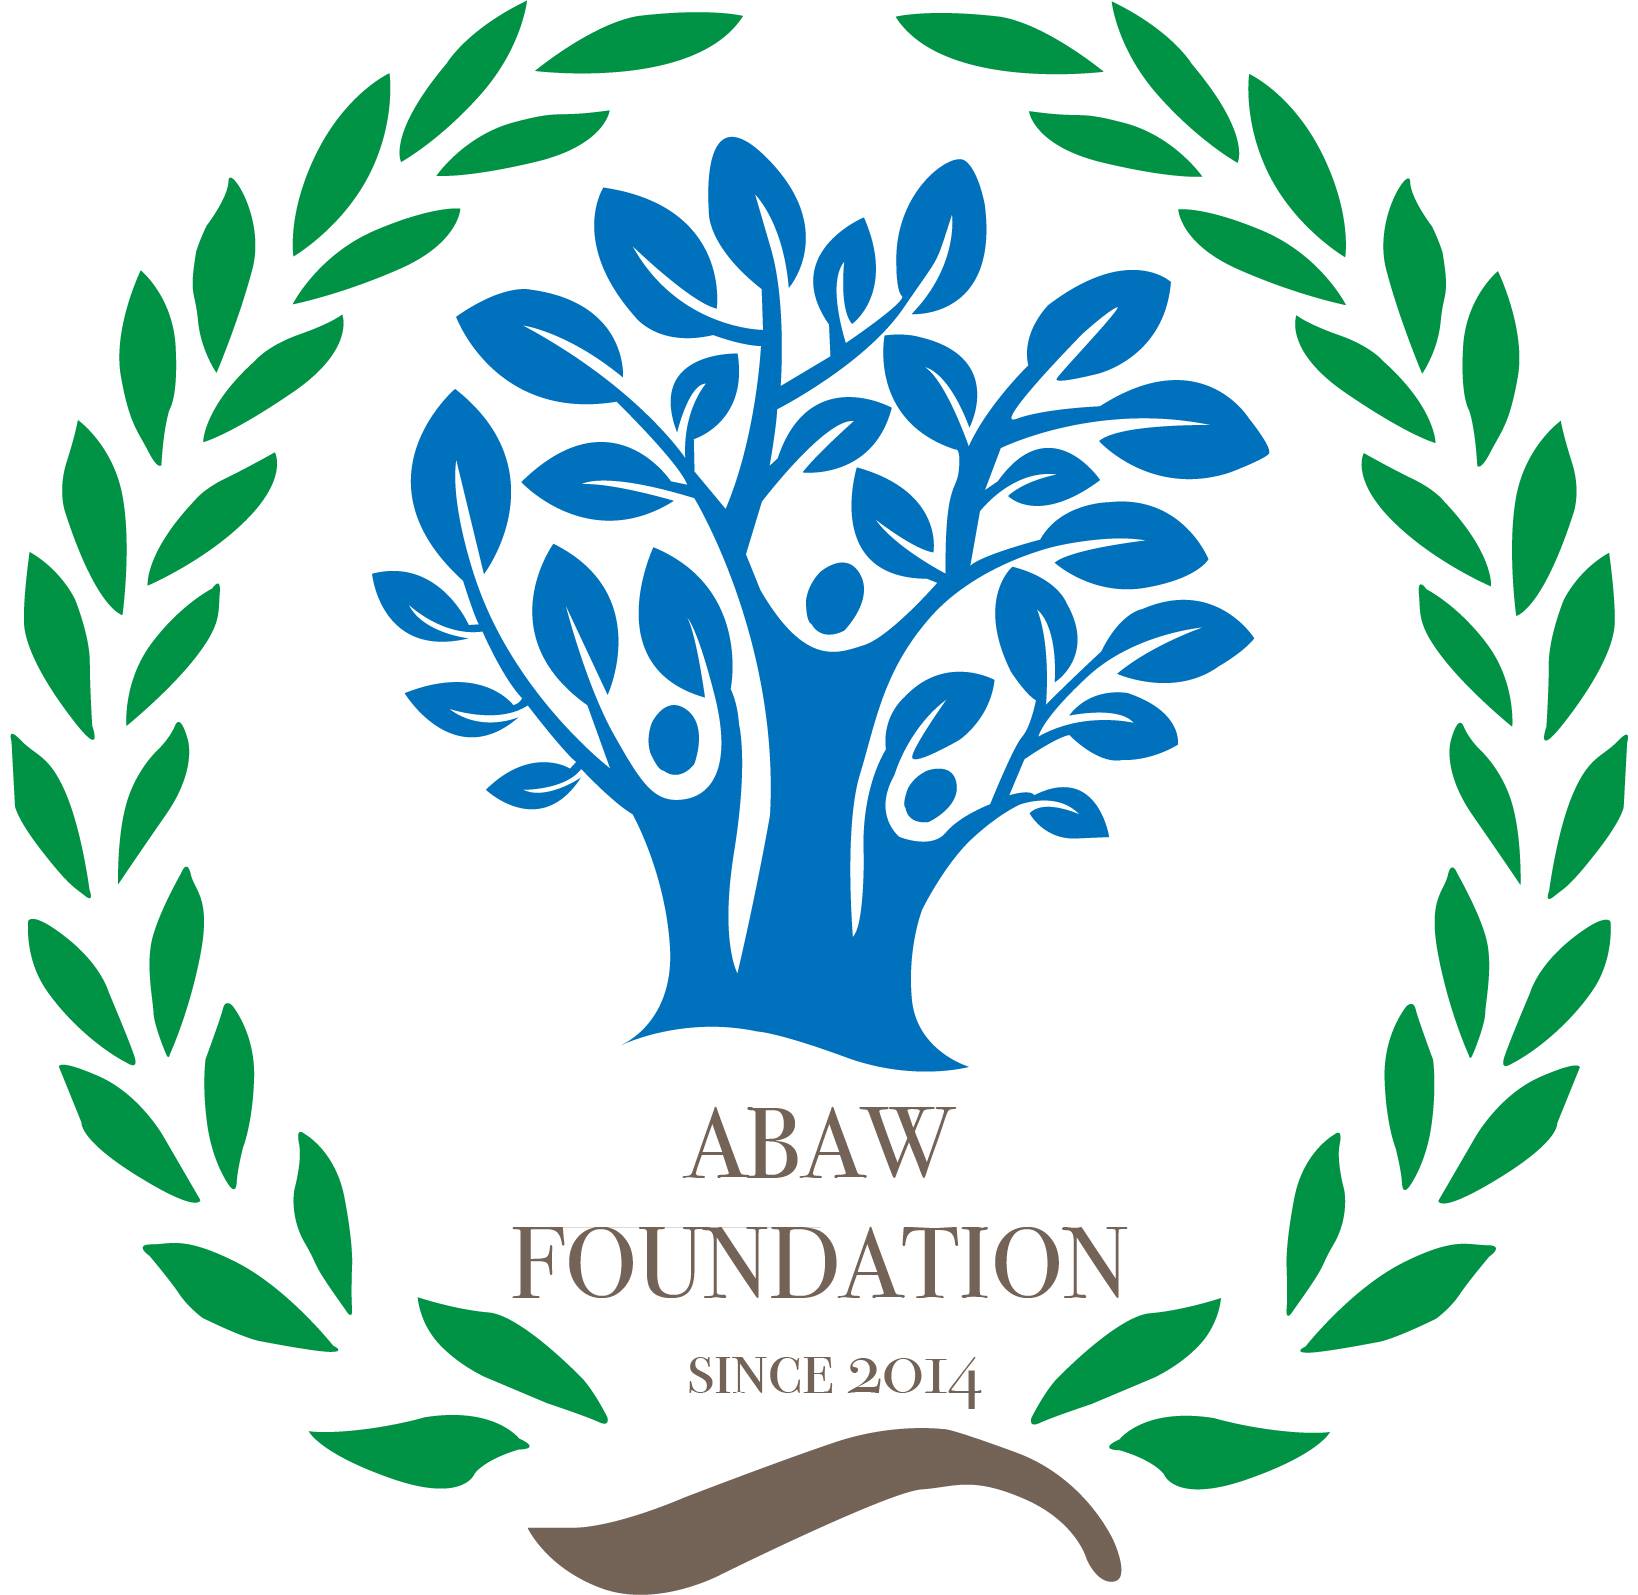 ABAW Foundation